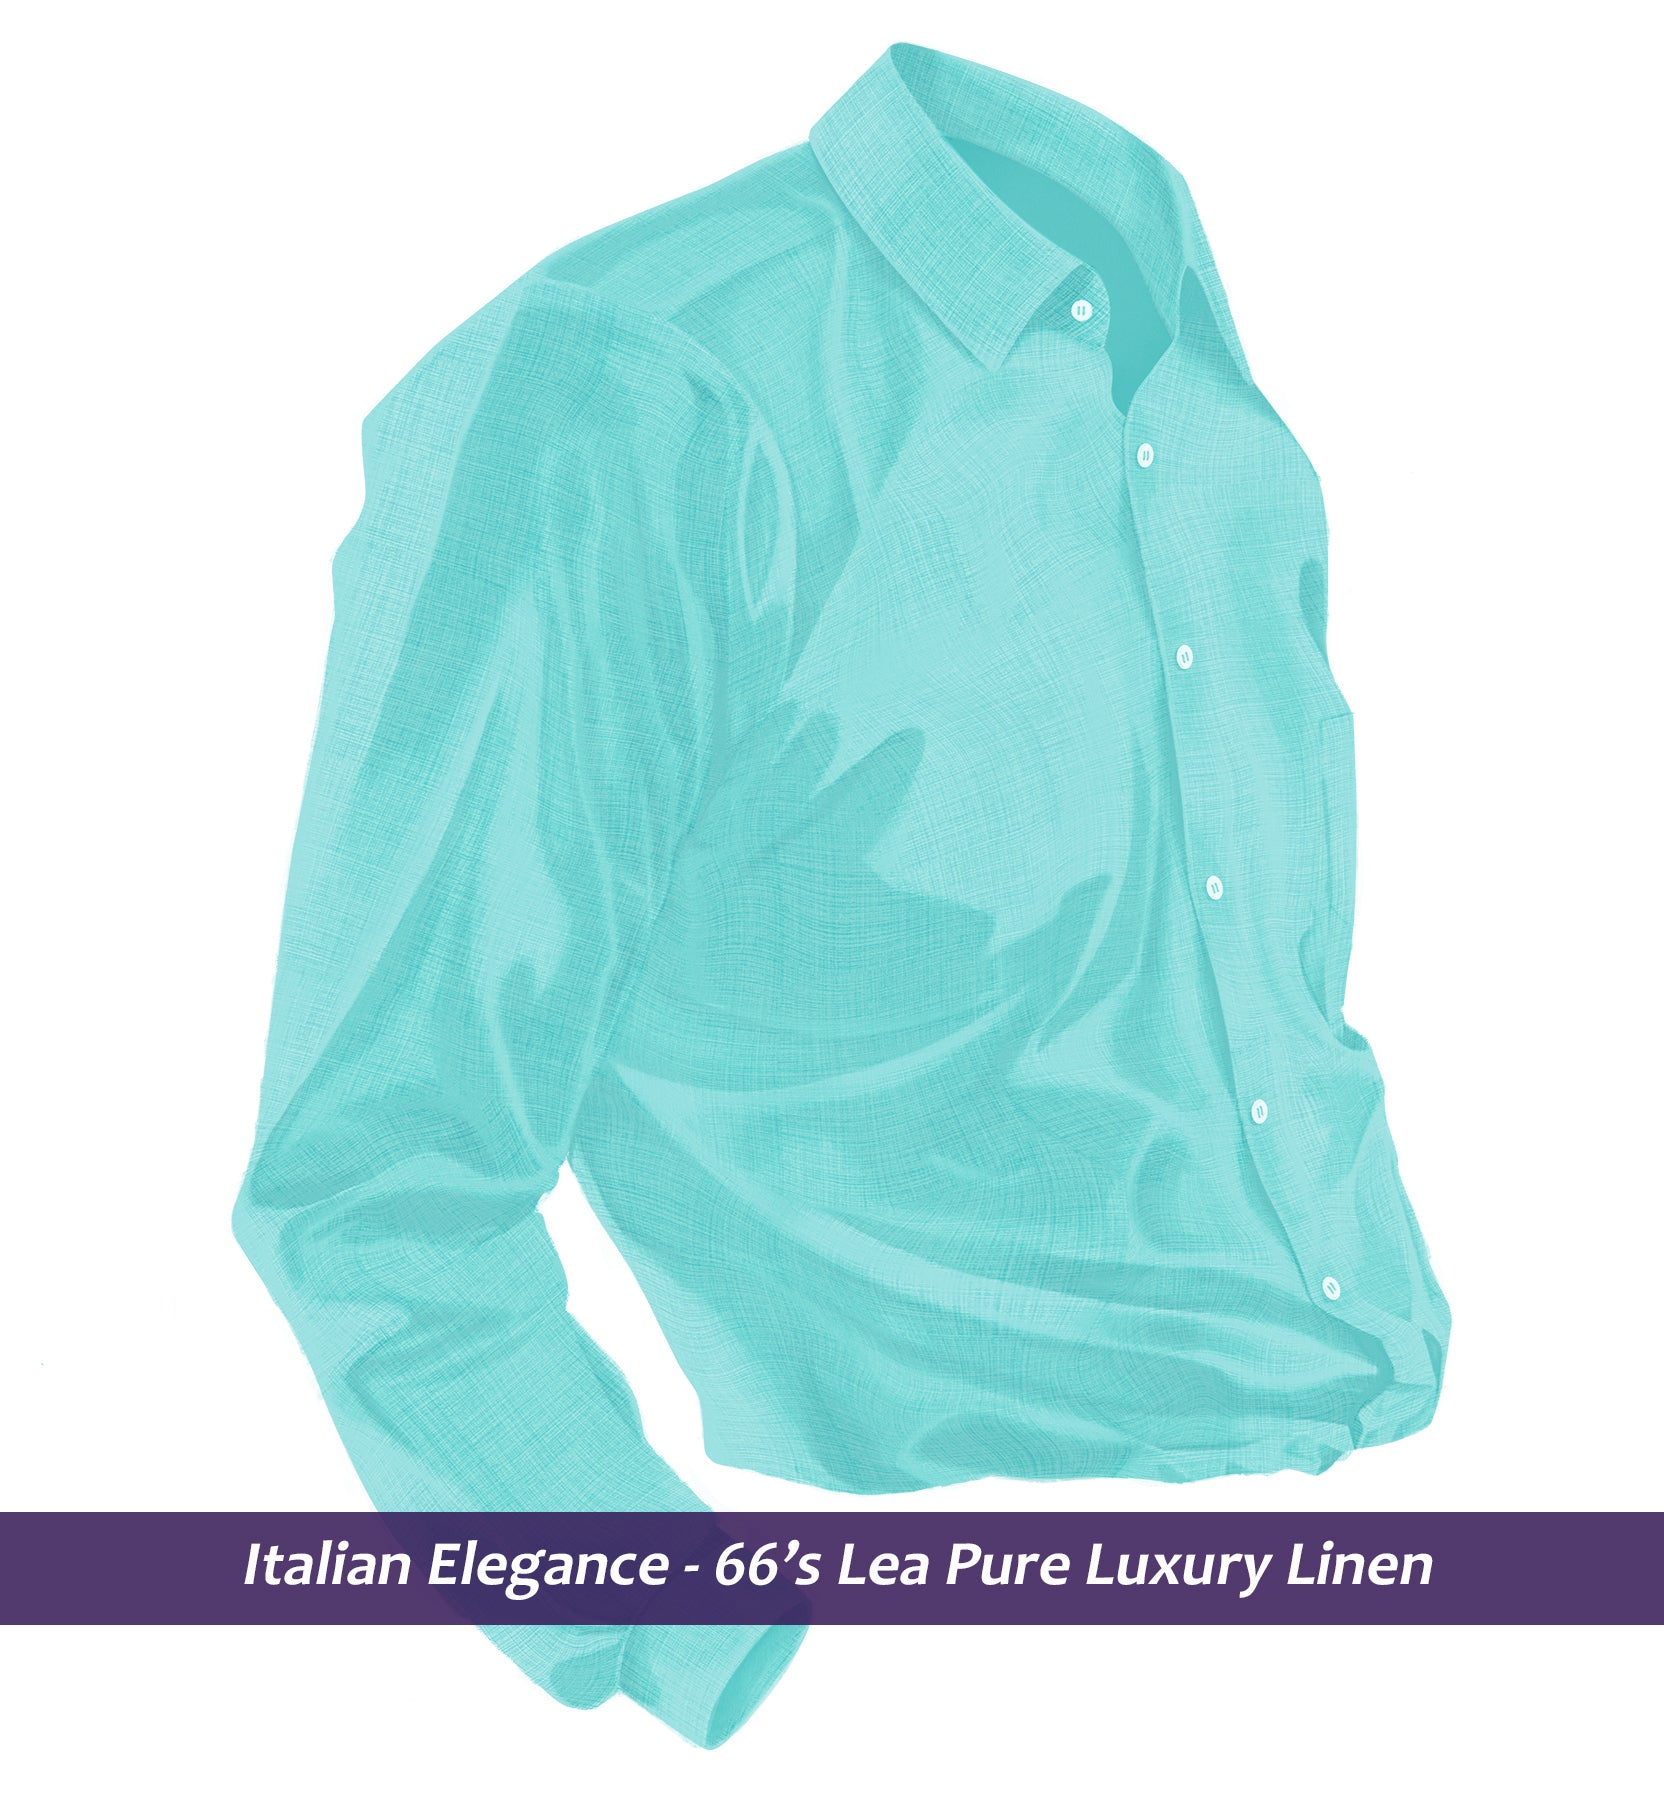 Fontana- Turquoise Green Solid Linen- 66's Lea Pure Luxury Linen